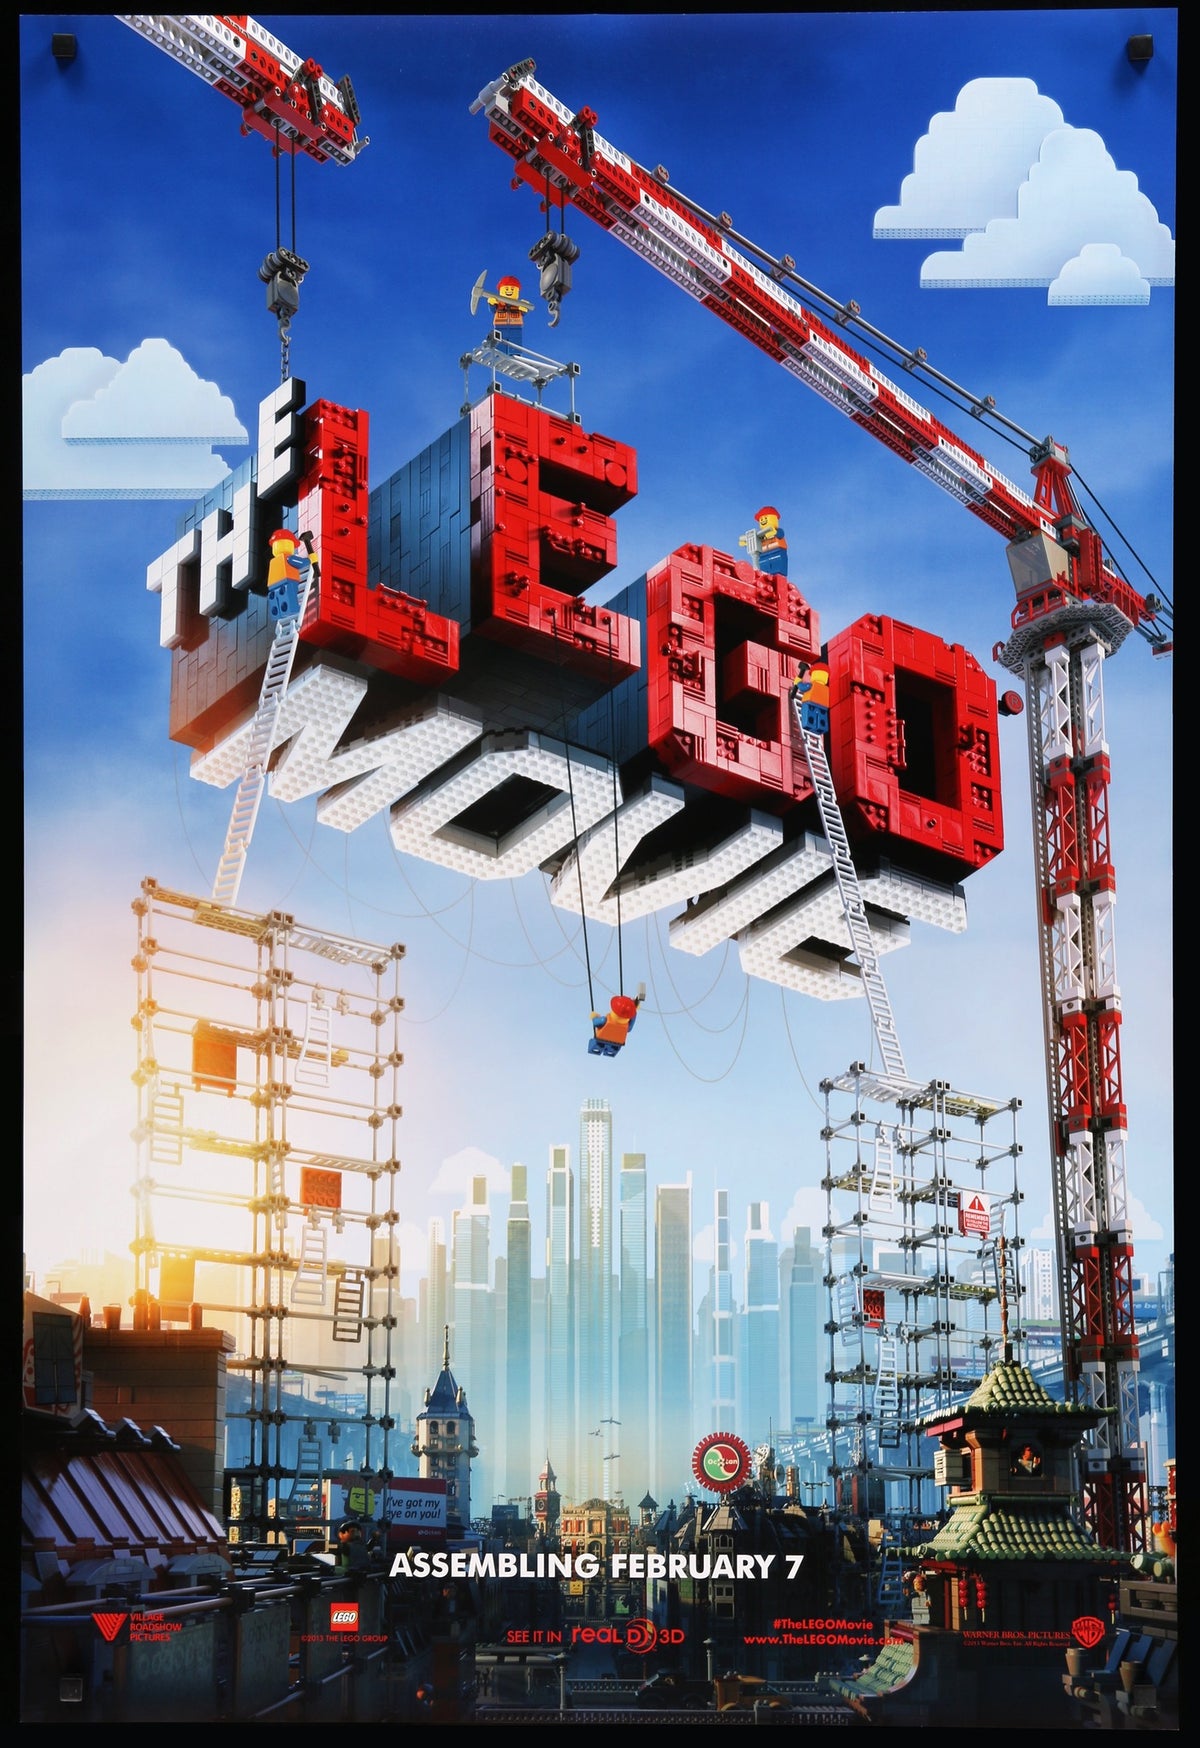 Lego Movie (2014) original movie poster for sale at Original Film Art